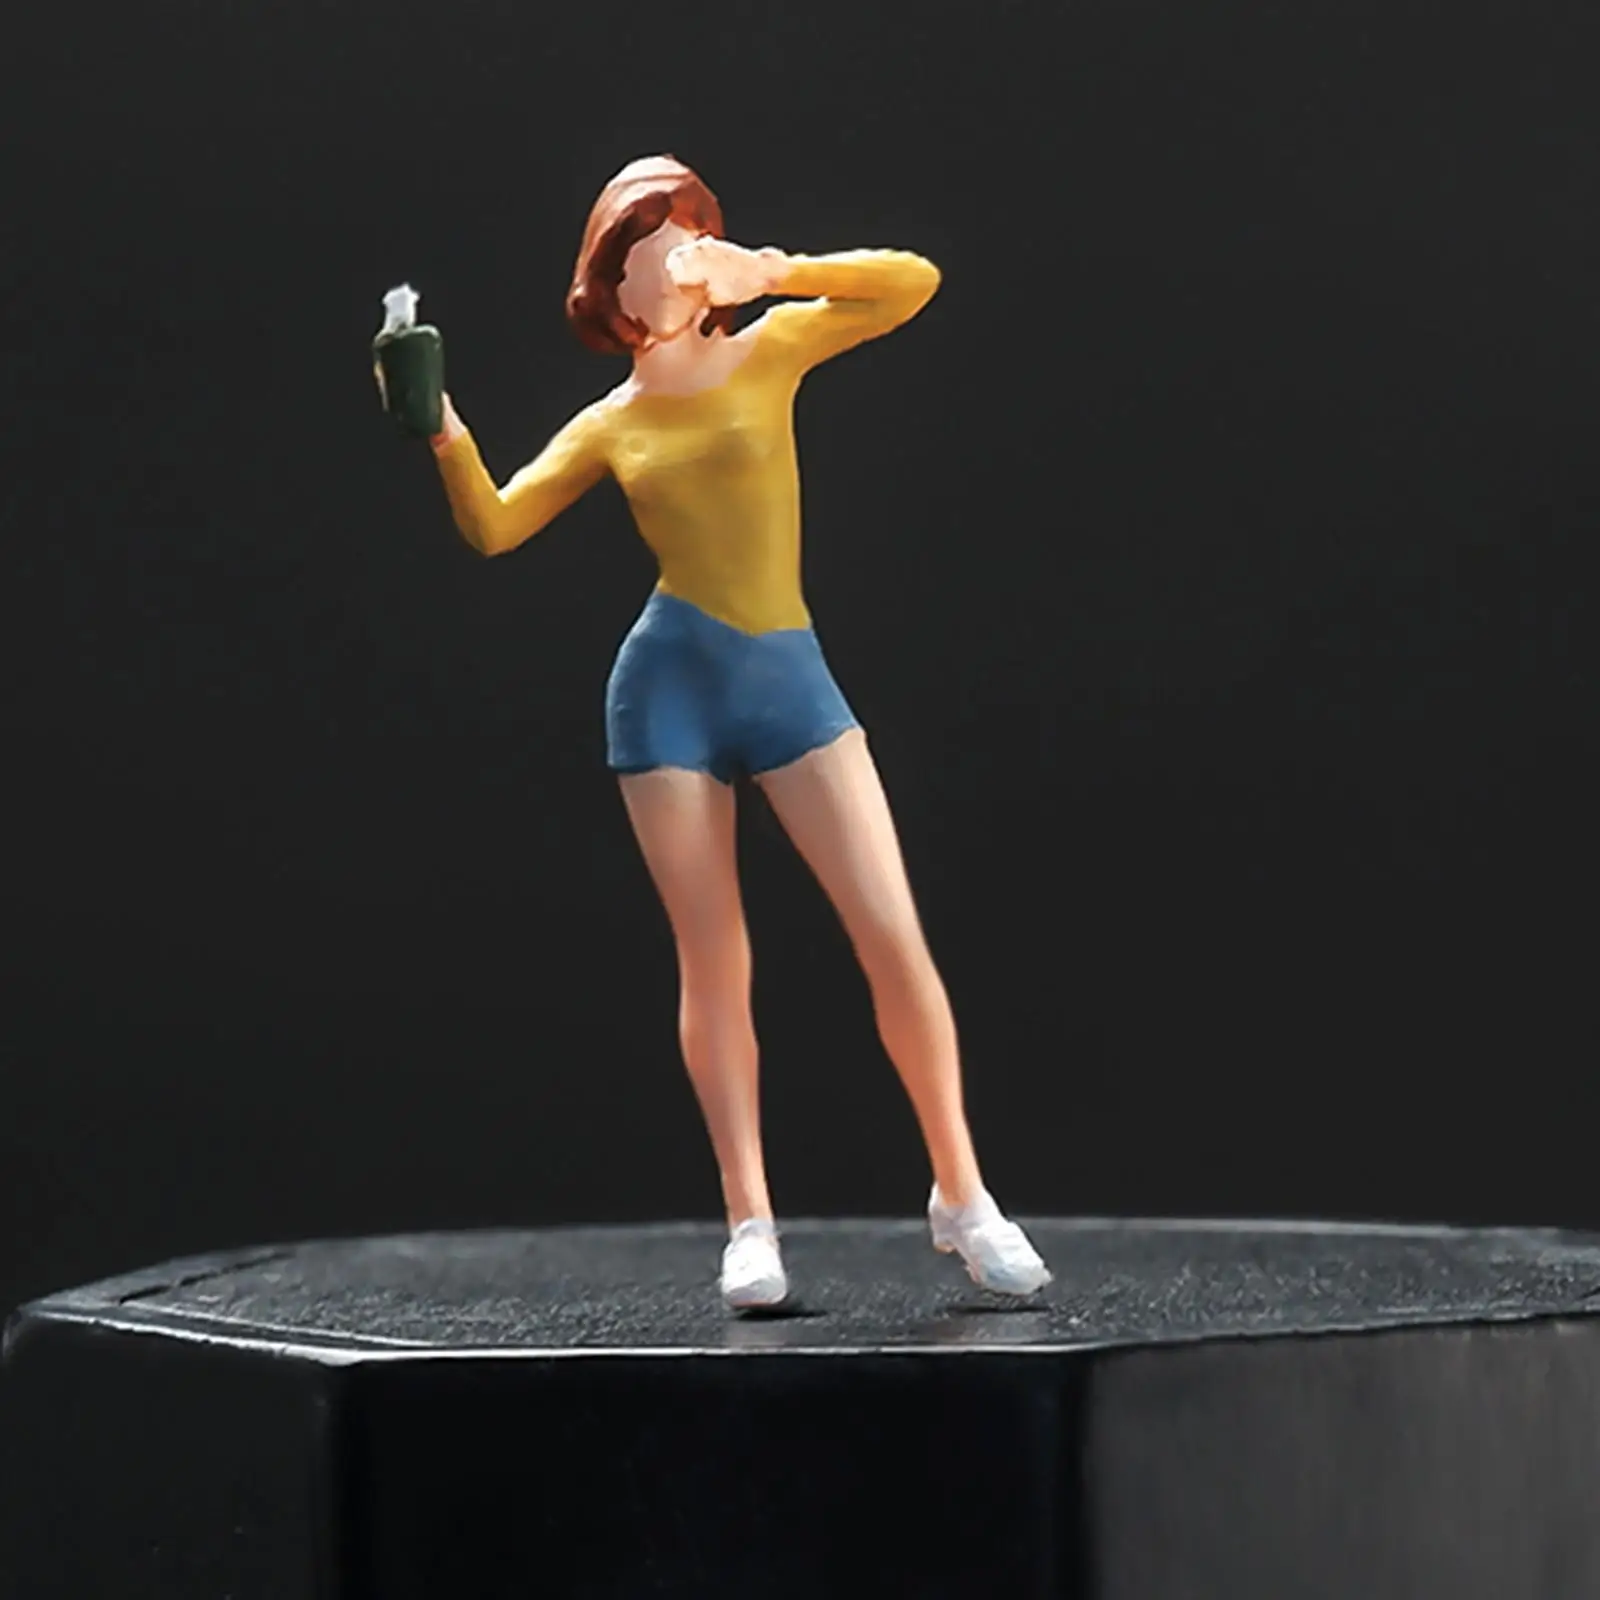 1/64 Scale Miniature Figures for Desktop Ornament Collections Fariy Garden